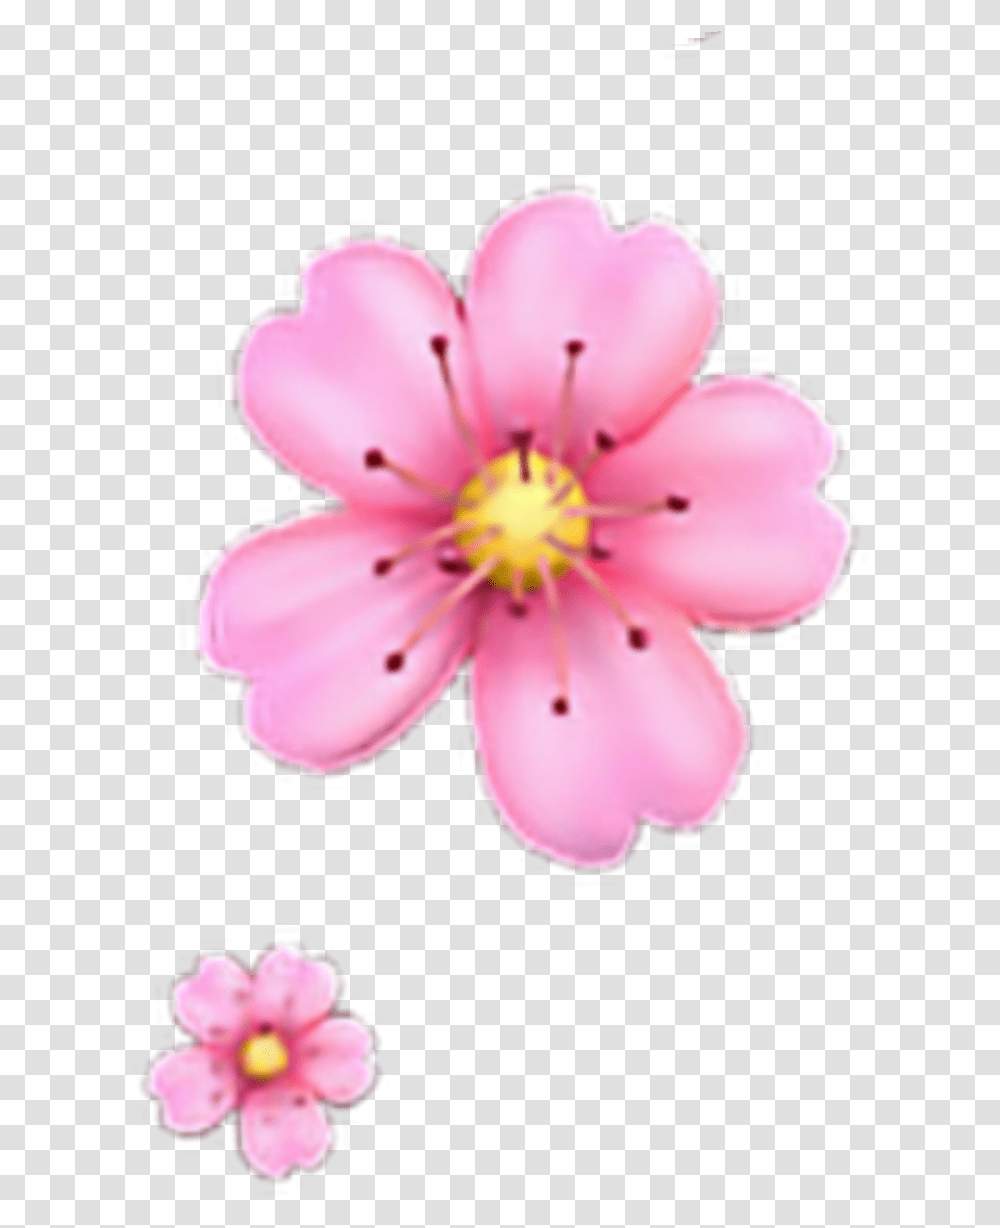 Freetoedit Floweremoji Flower Emoji Iphone Iphoneemoji Pink Flower Emoji, Plant, Blossom, Anther, Petal Transparent Png